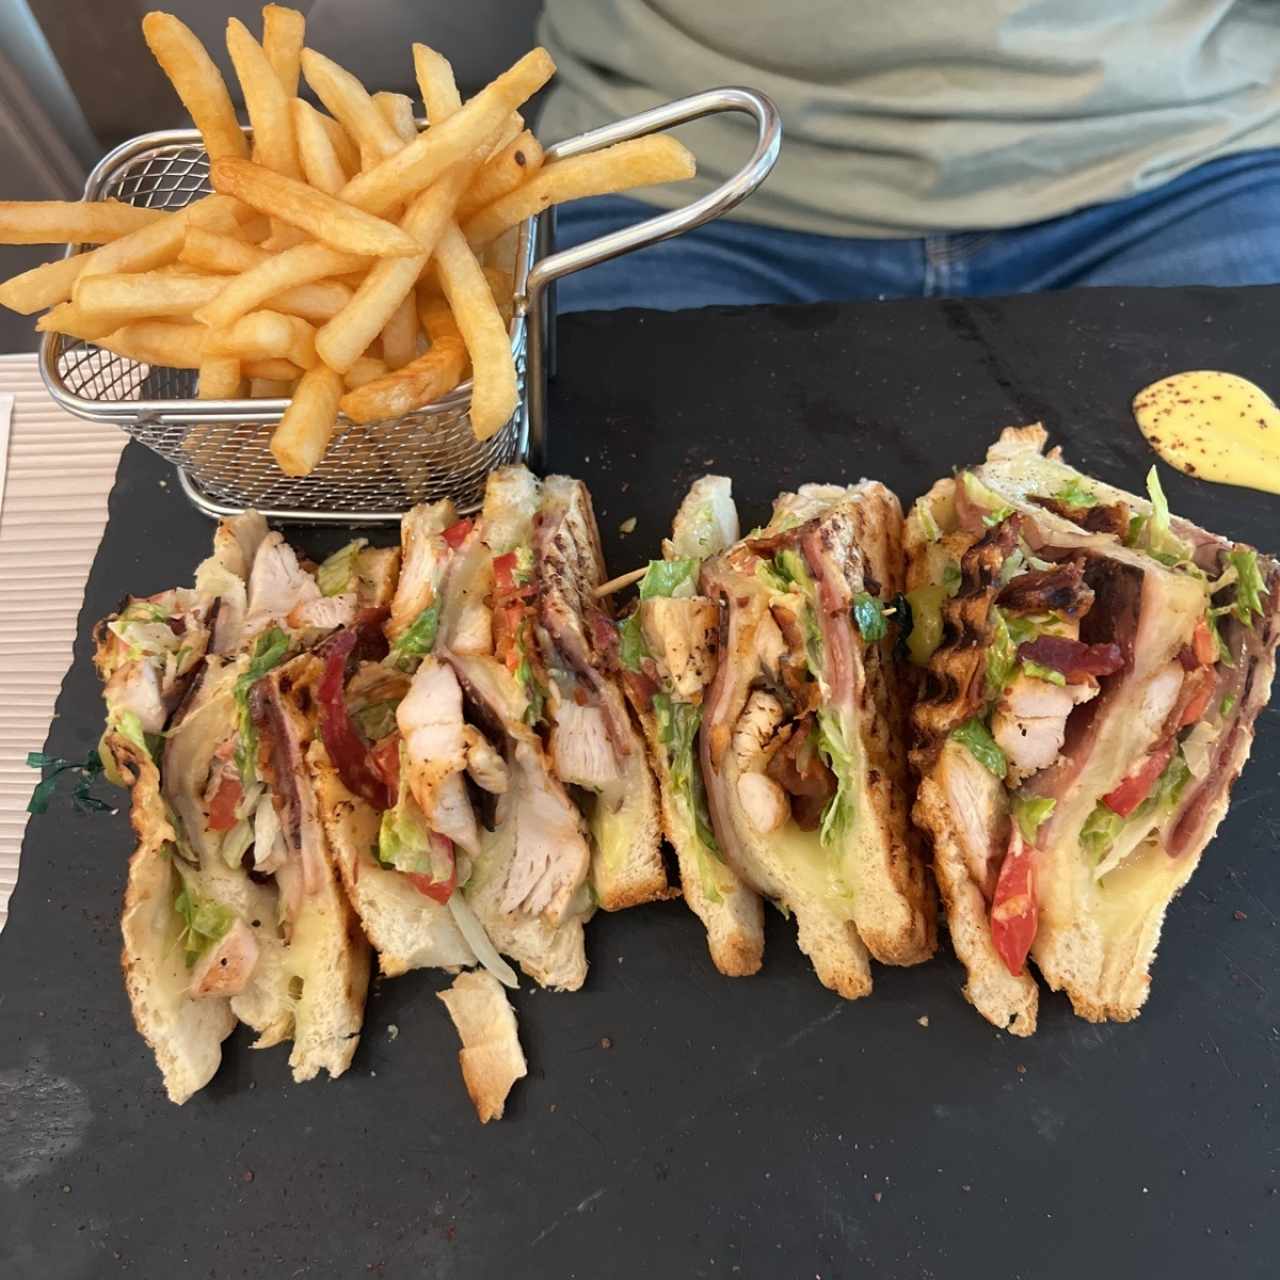 Sandwiches - Club sandwich